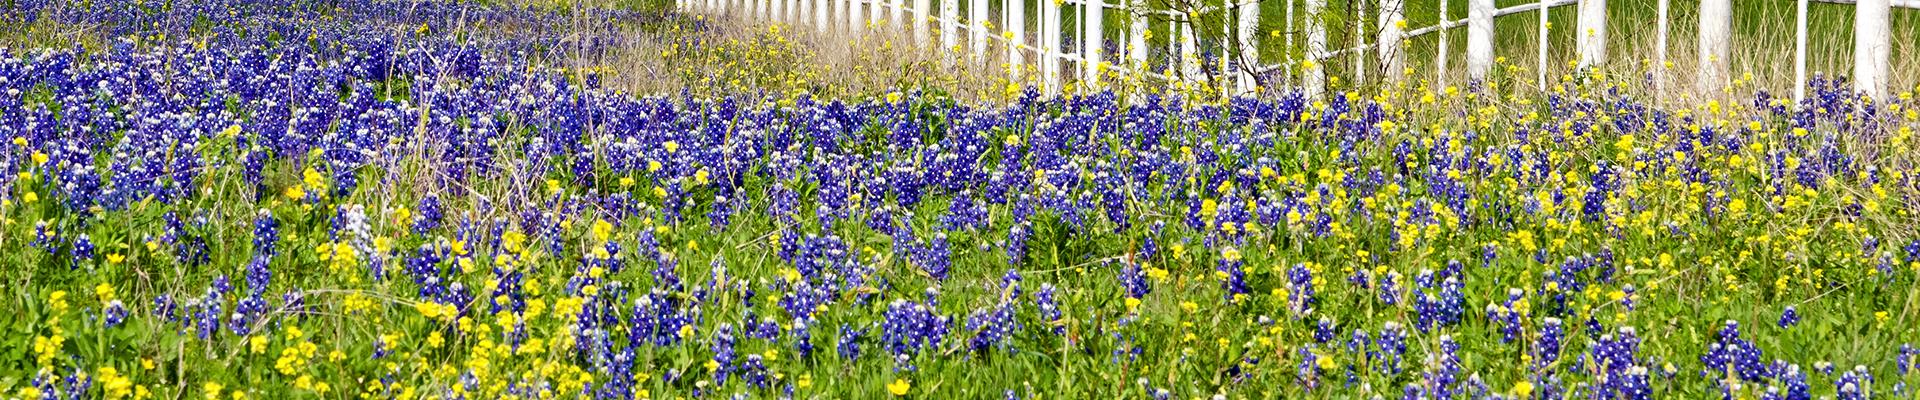 a field of flowers in aubrey texas